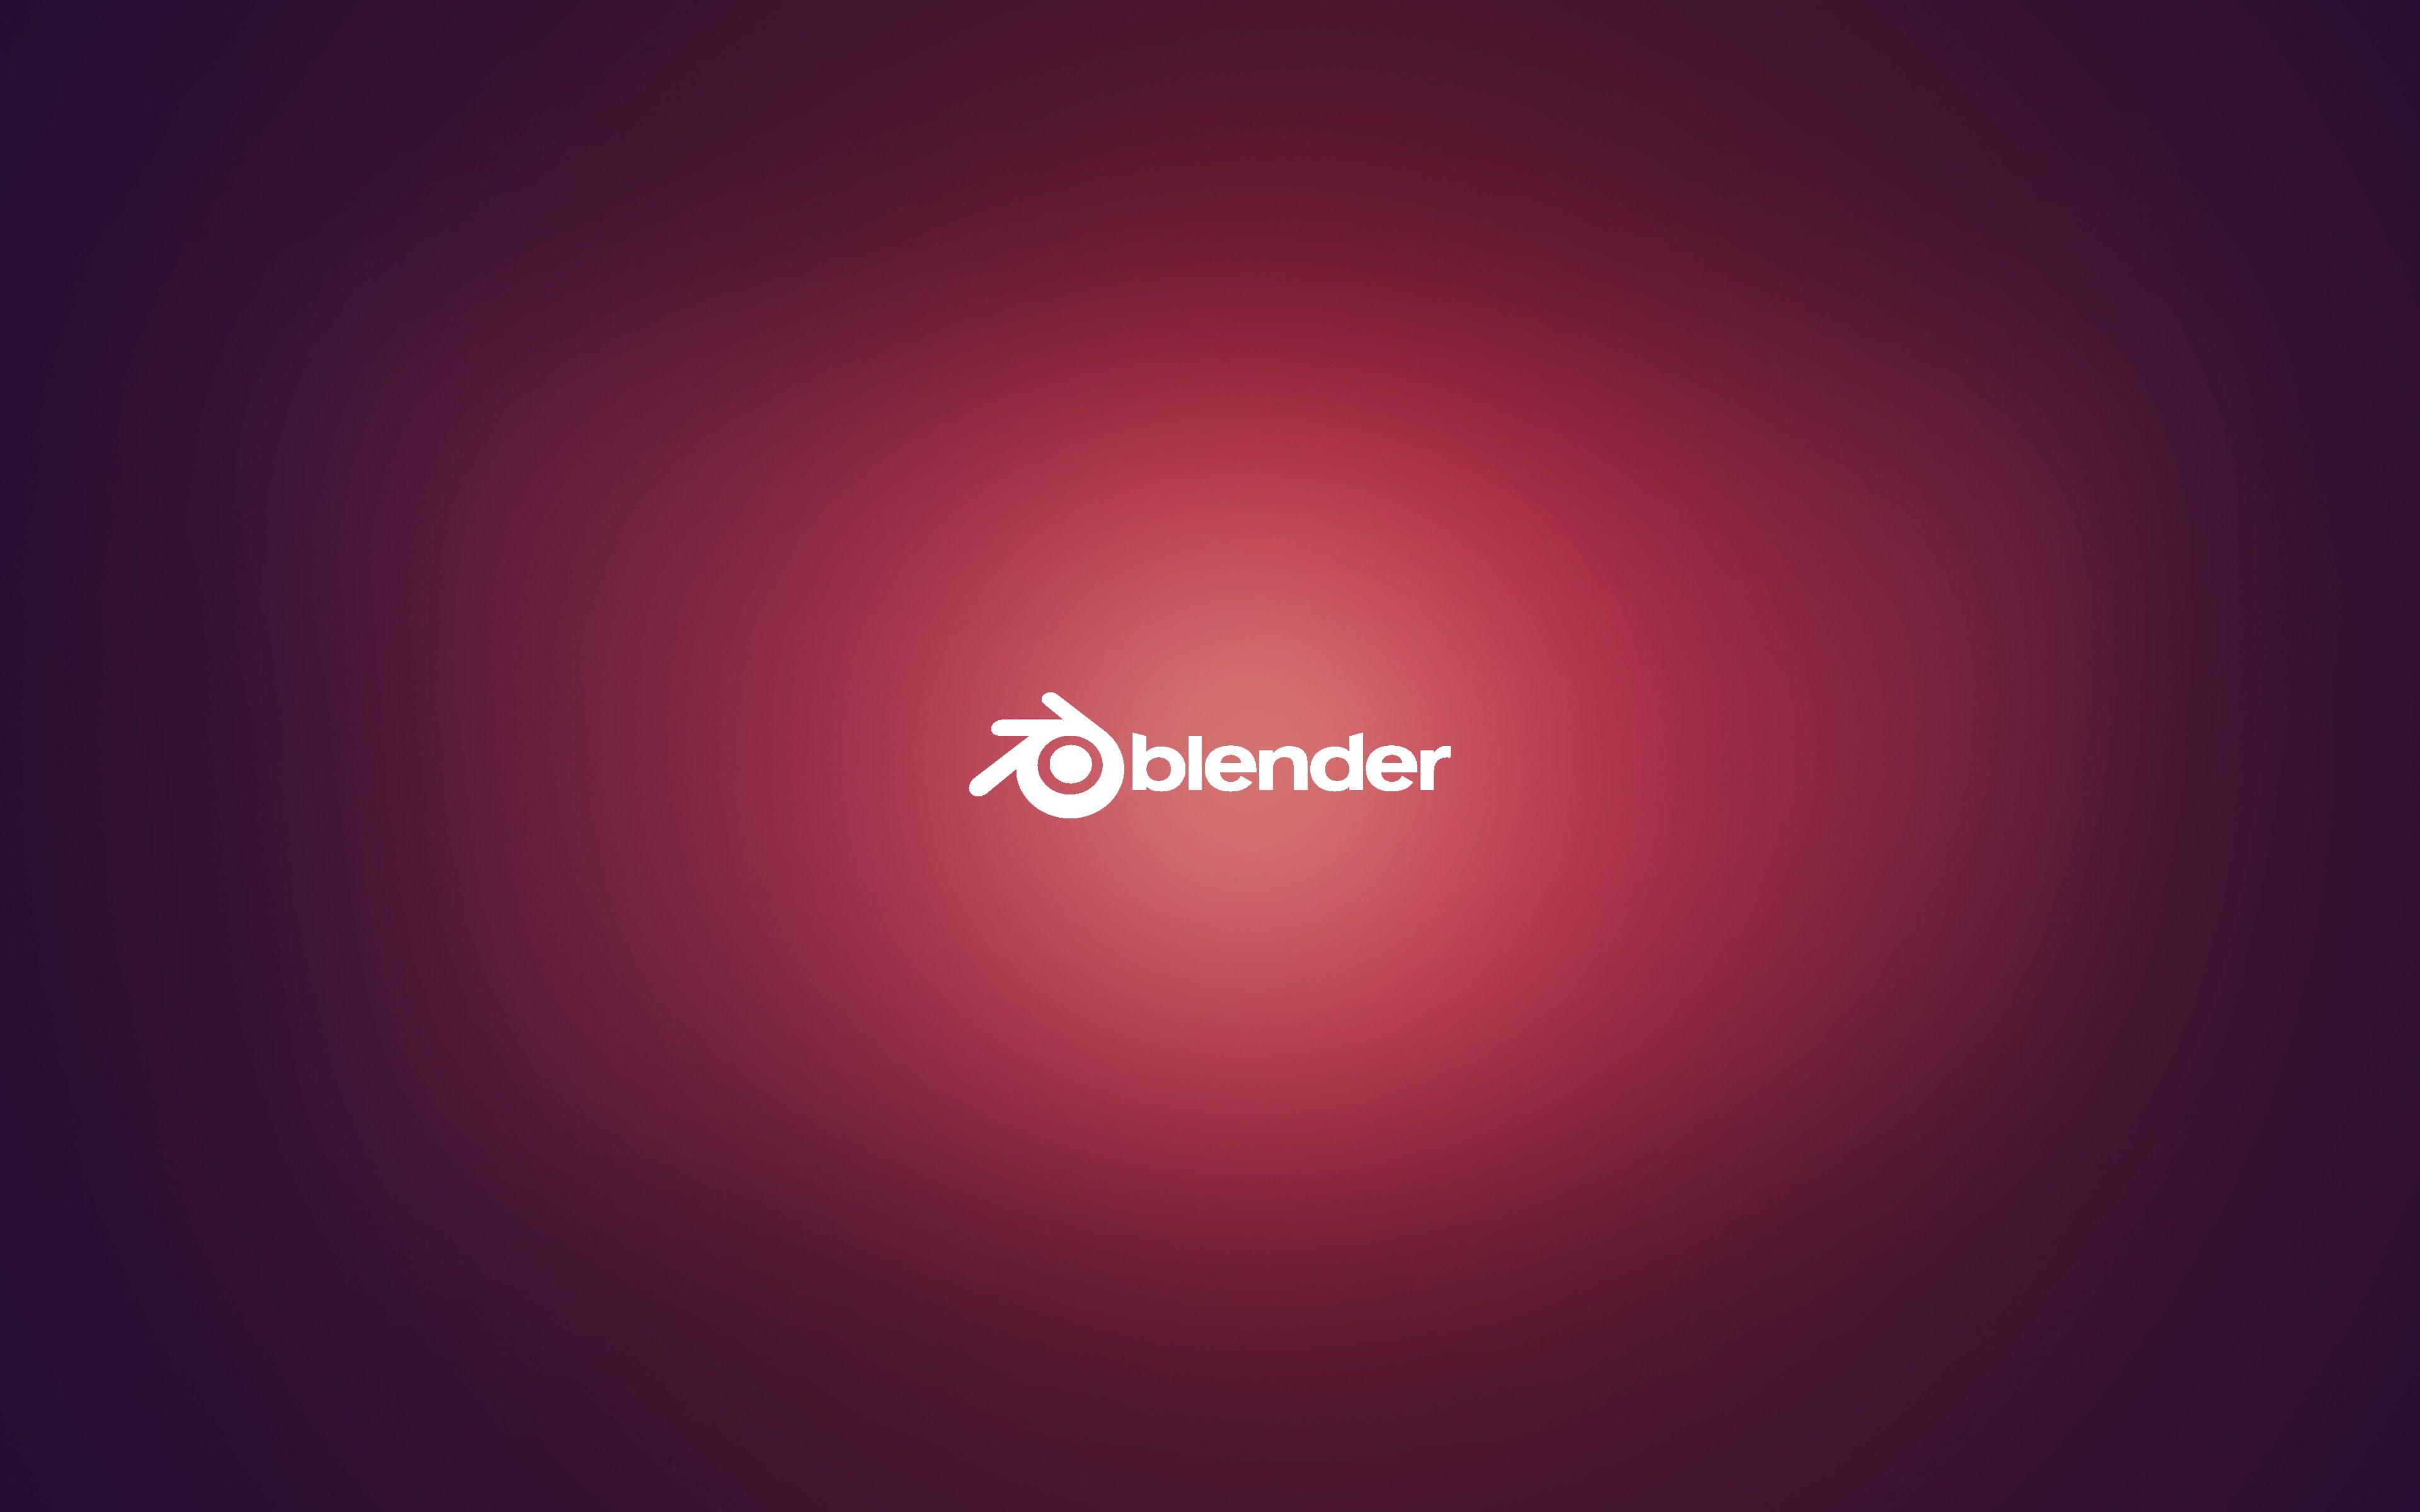 Blender Wallpapers Top Free Blender Backgrounds Wallpaperaccess